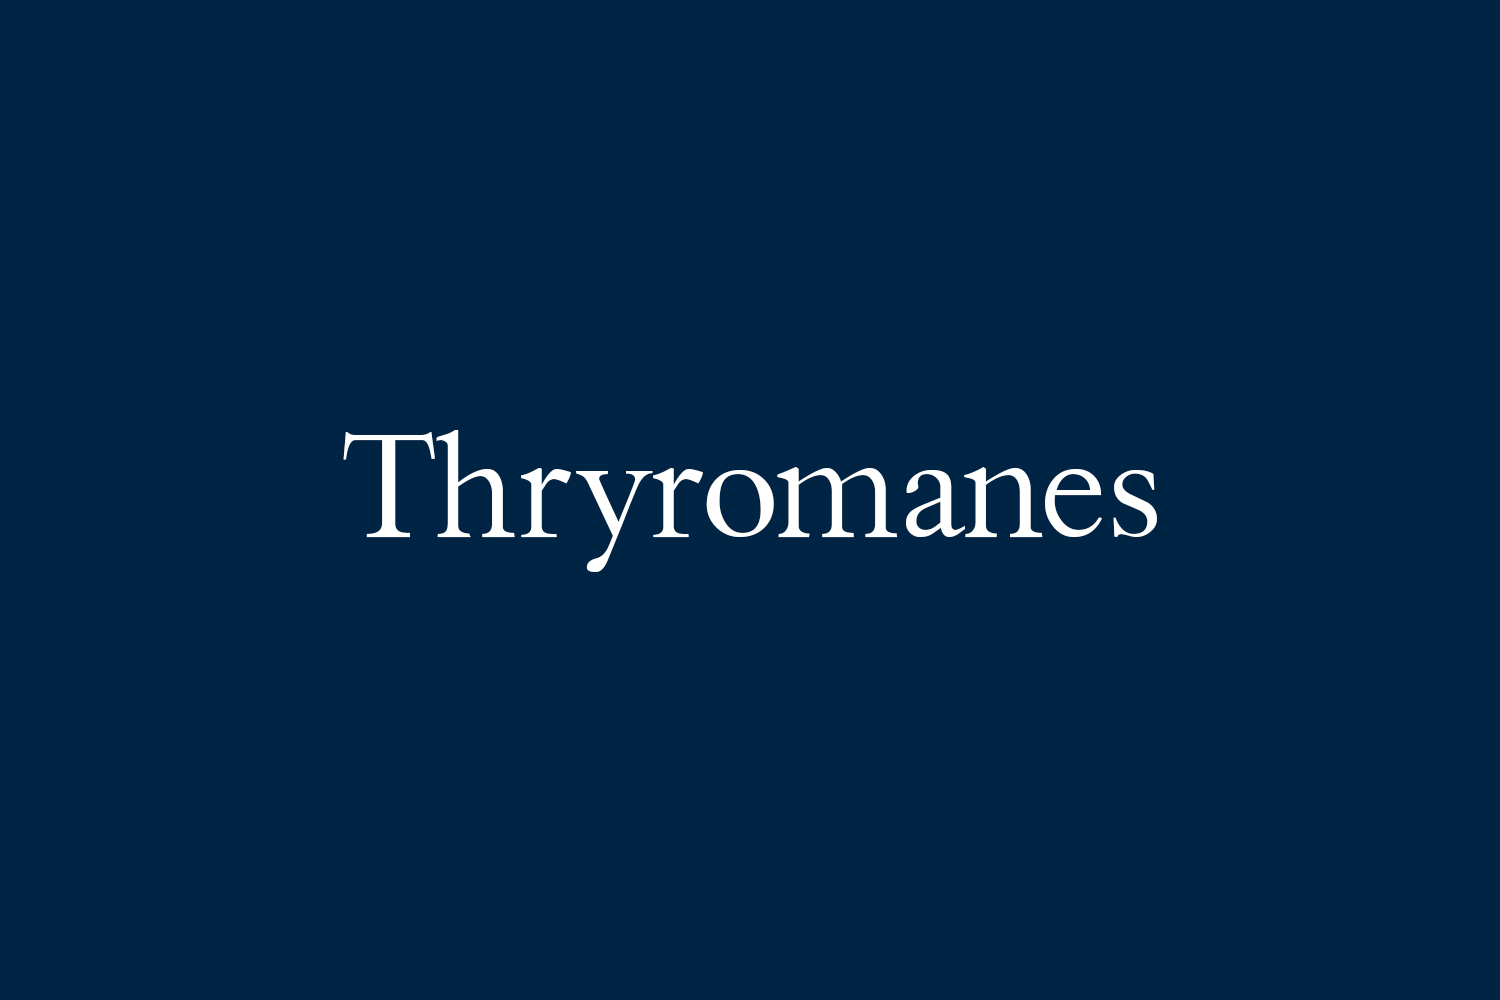 Thryromanes Free Font